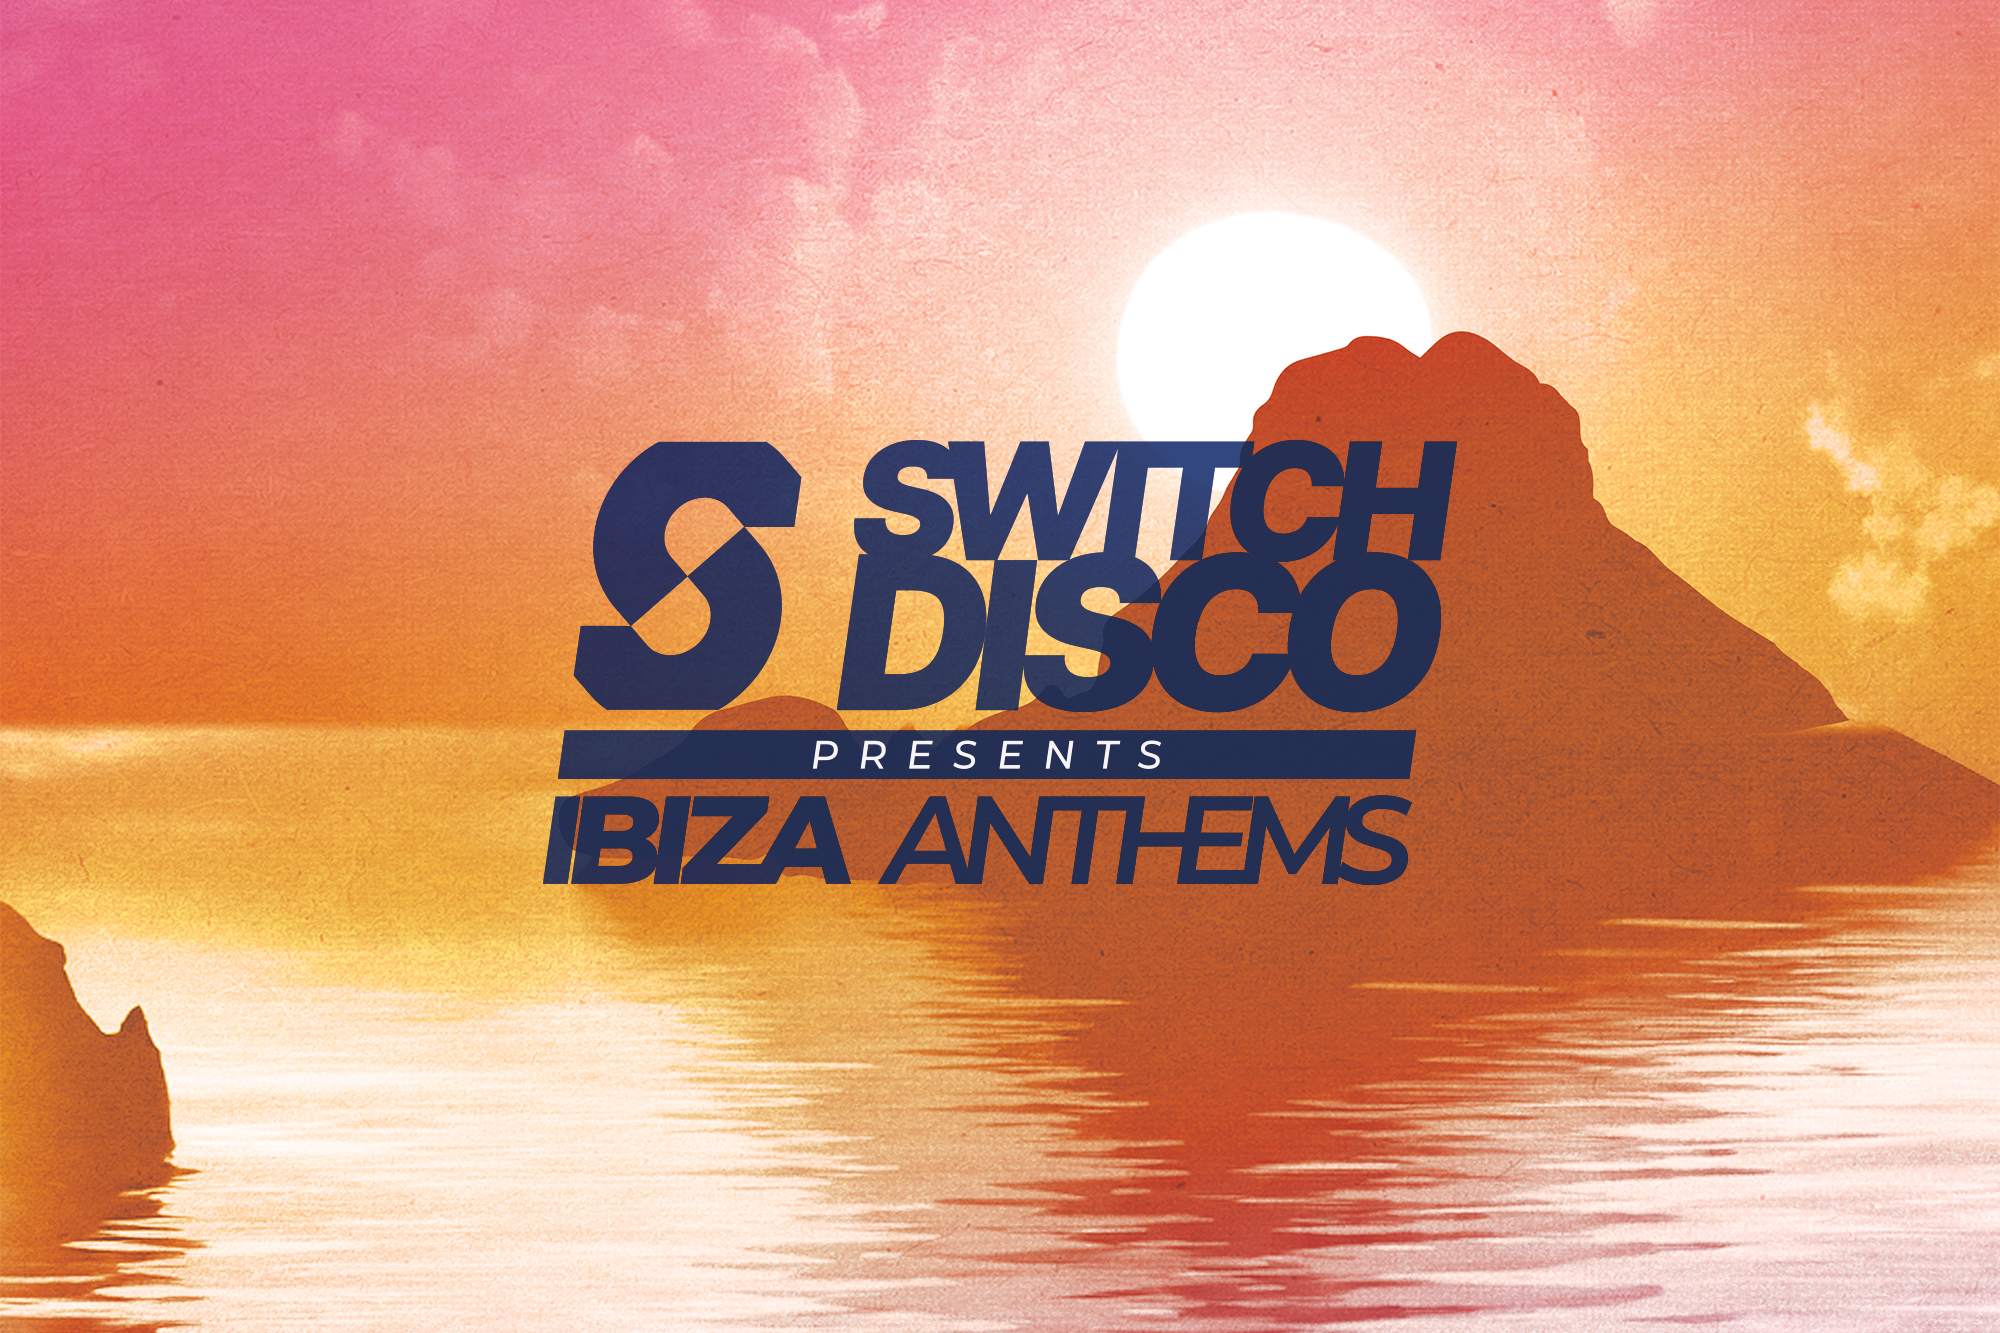 Switch Disco presents Ibiza Anthems - フライヤー表